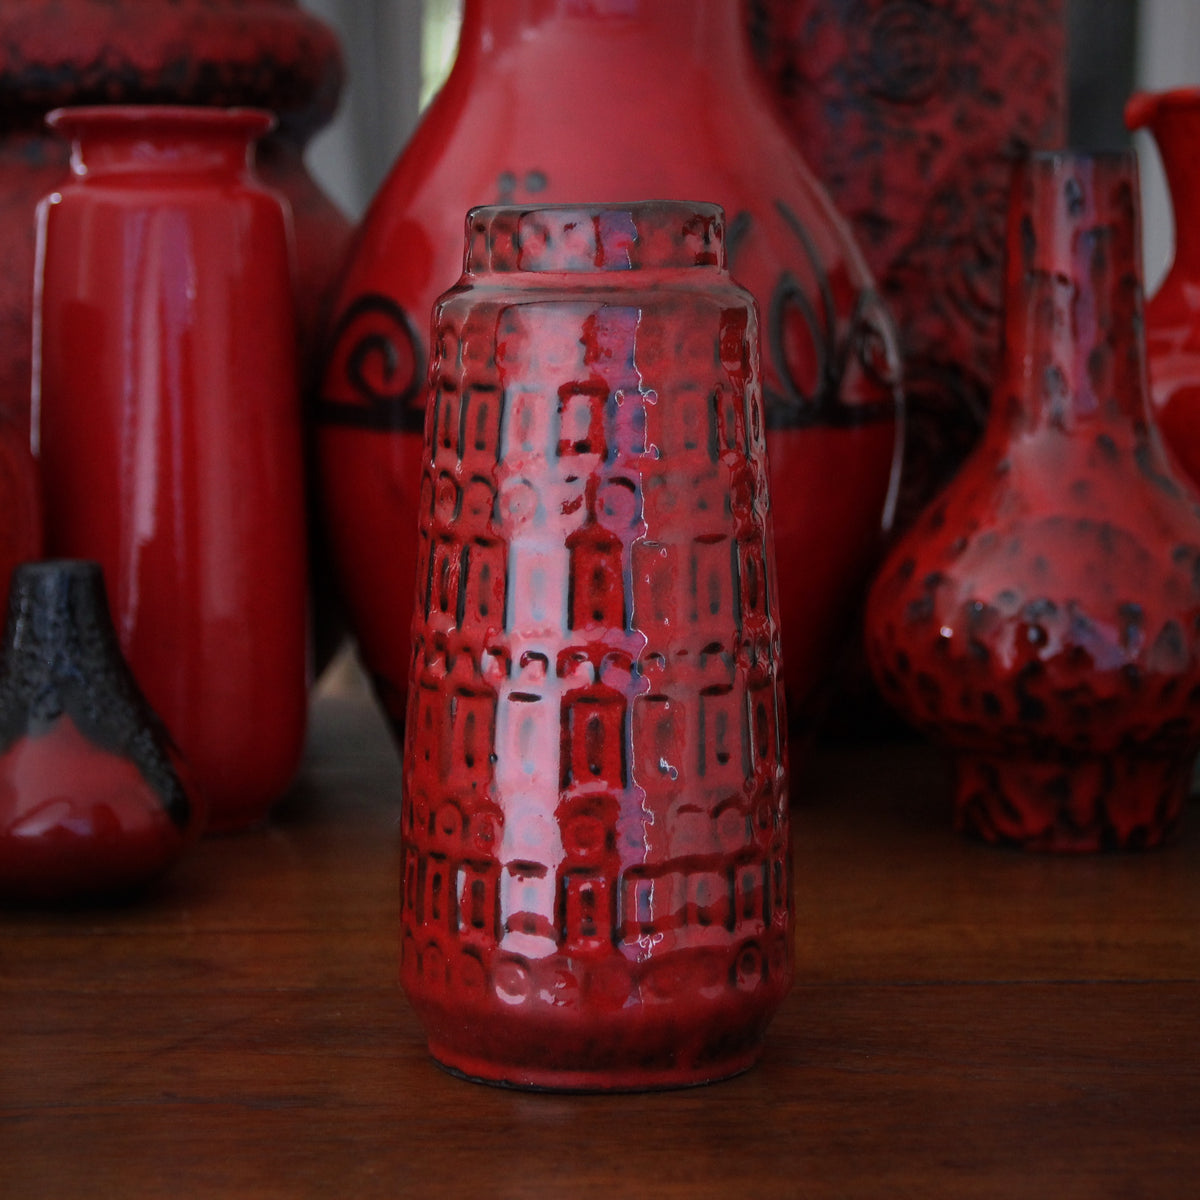 Modernist "Tiled" Red Vase